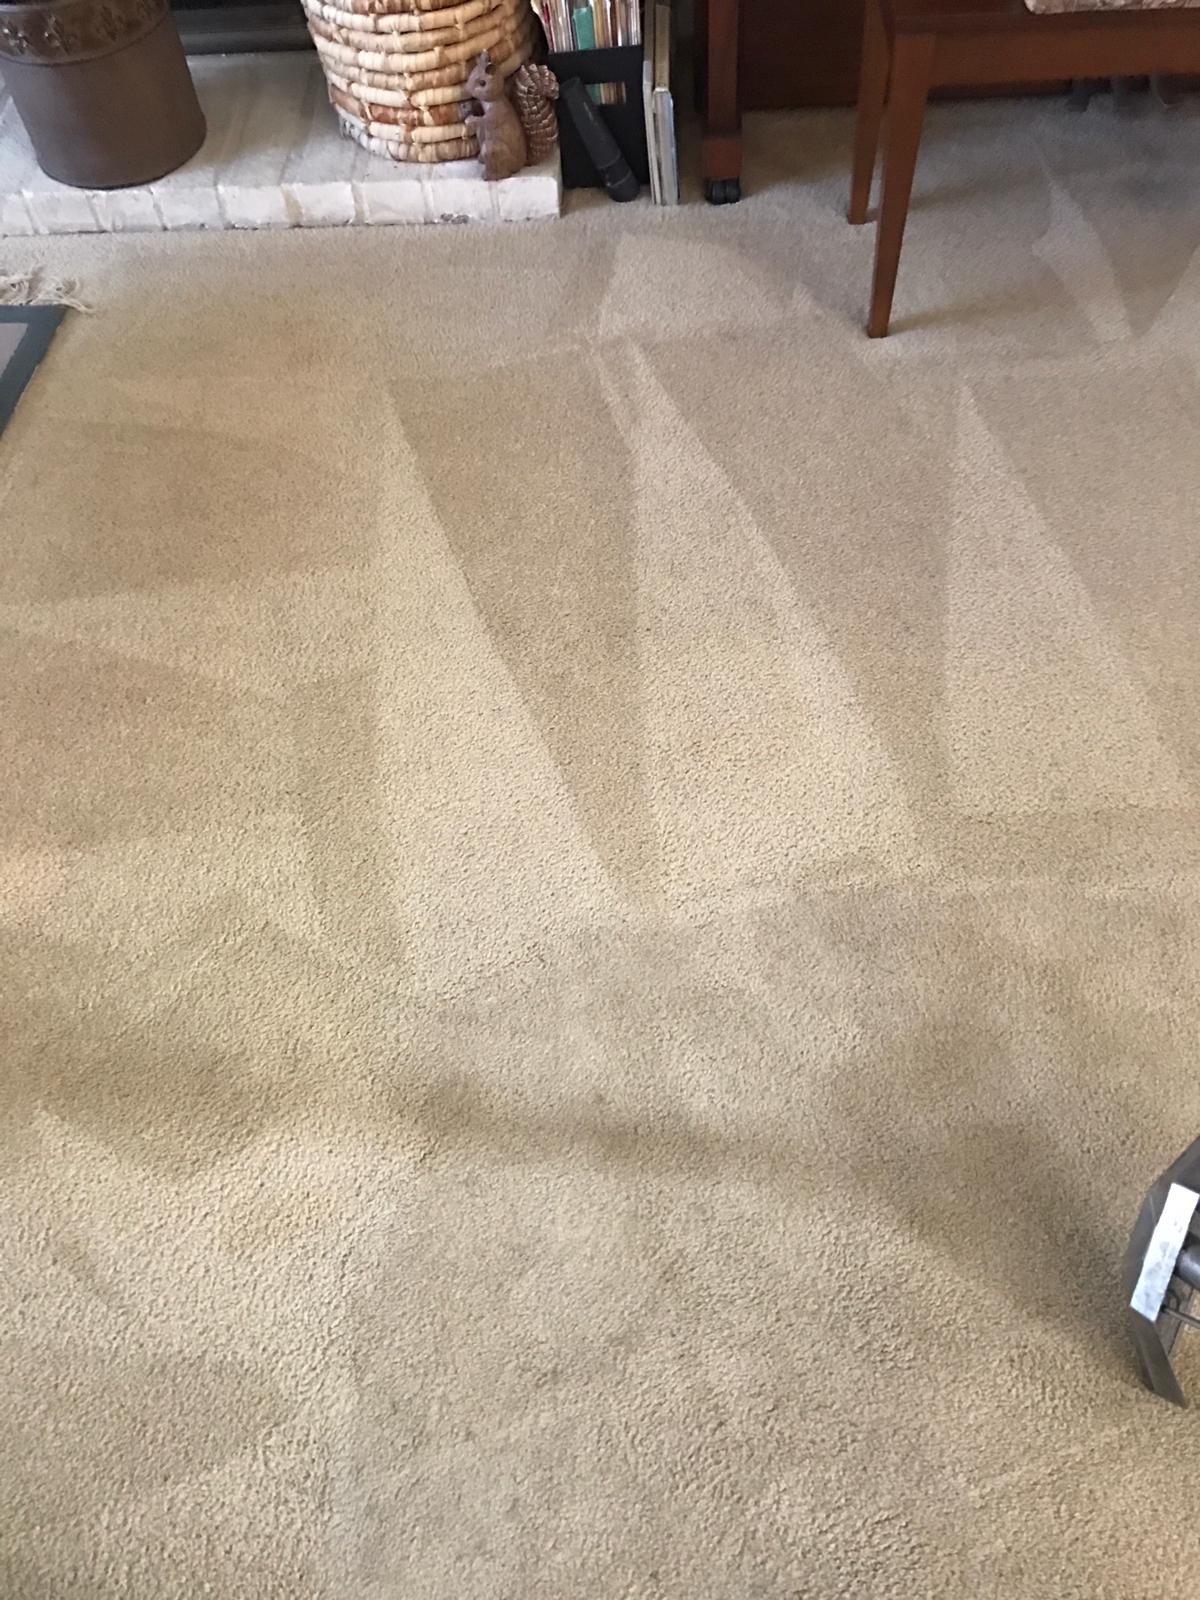 Carpet cleaner near me - SteamLine carpet cleaning restoration